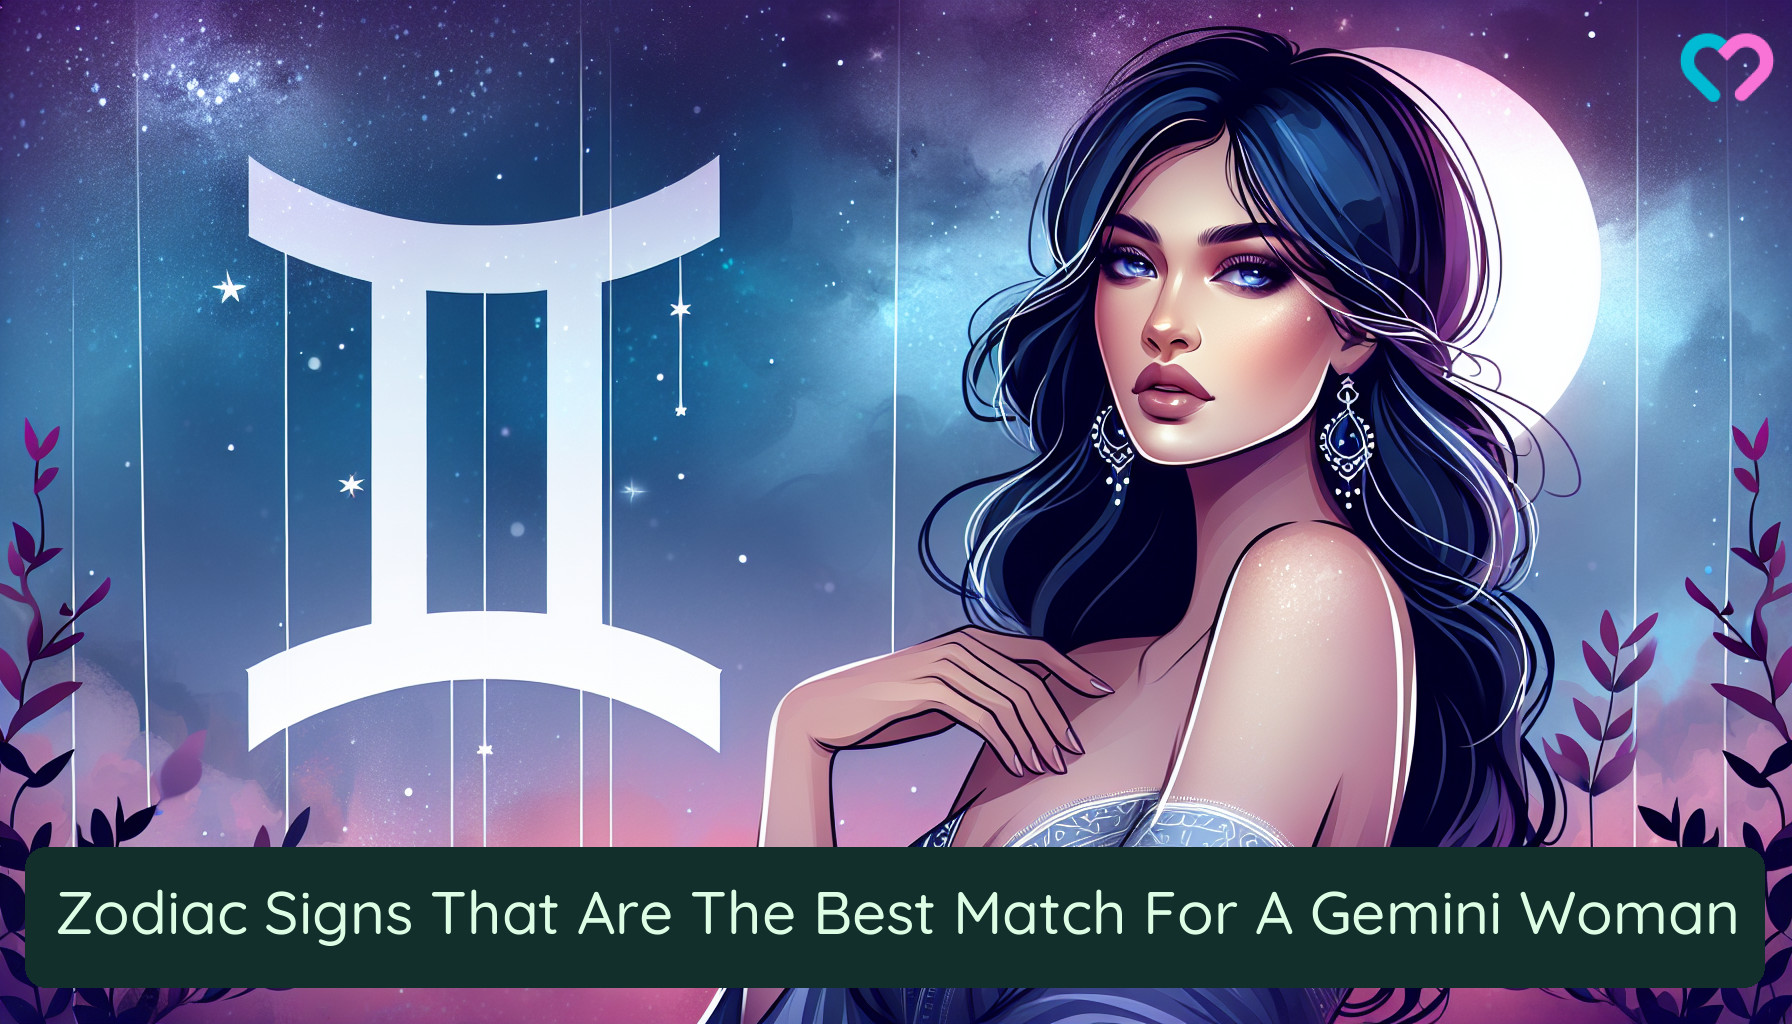 Best match for gemini woman_illustration